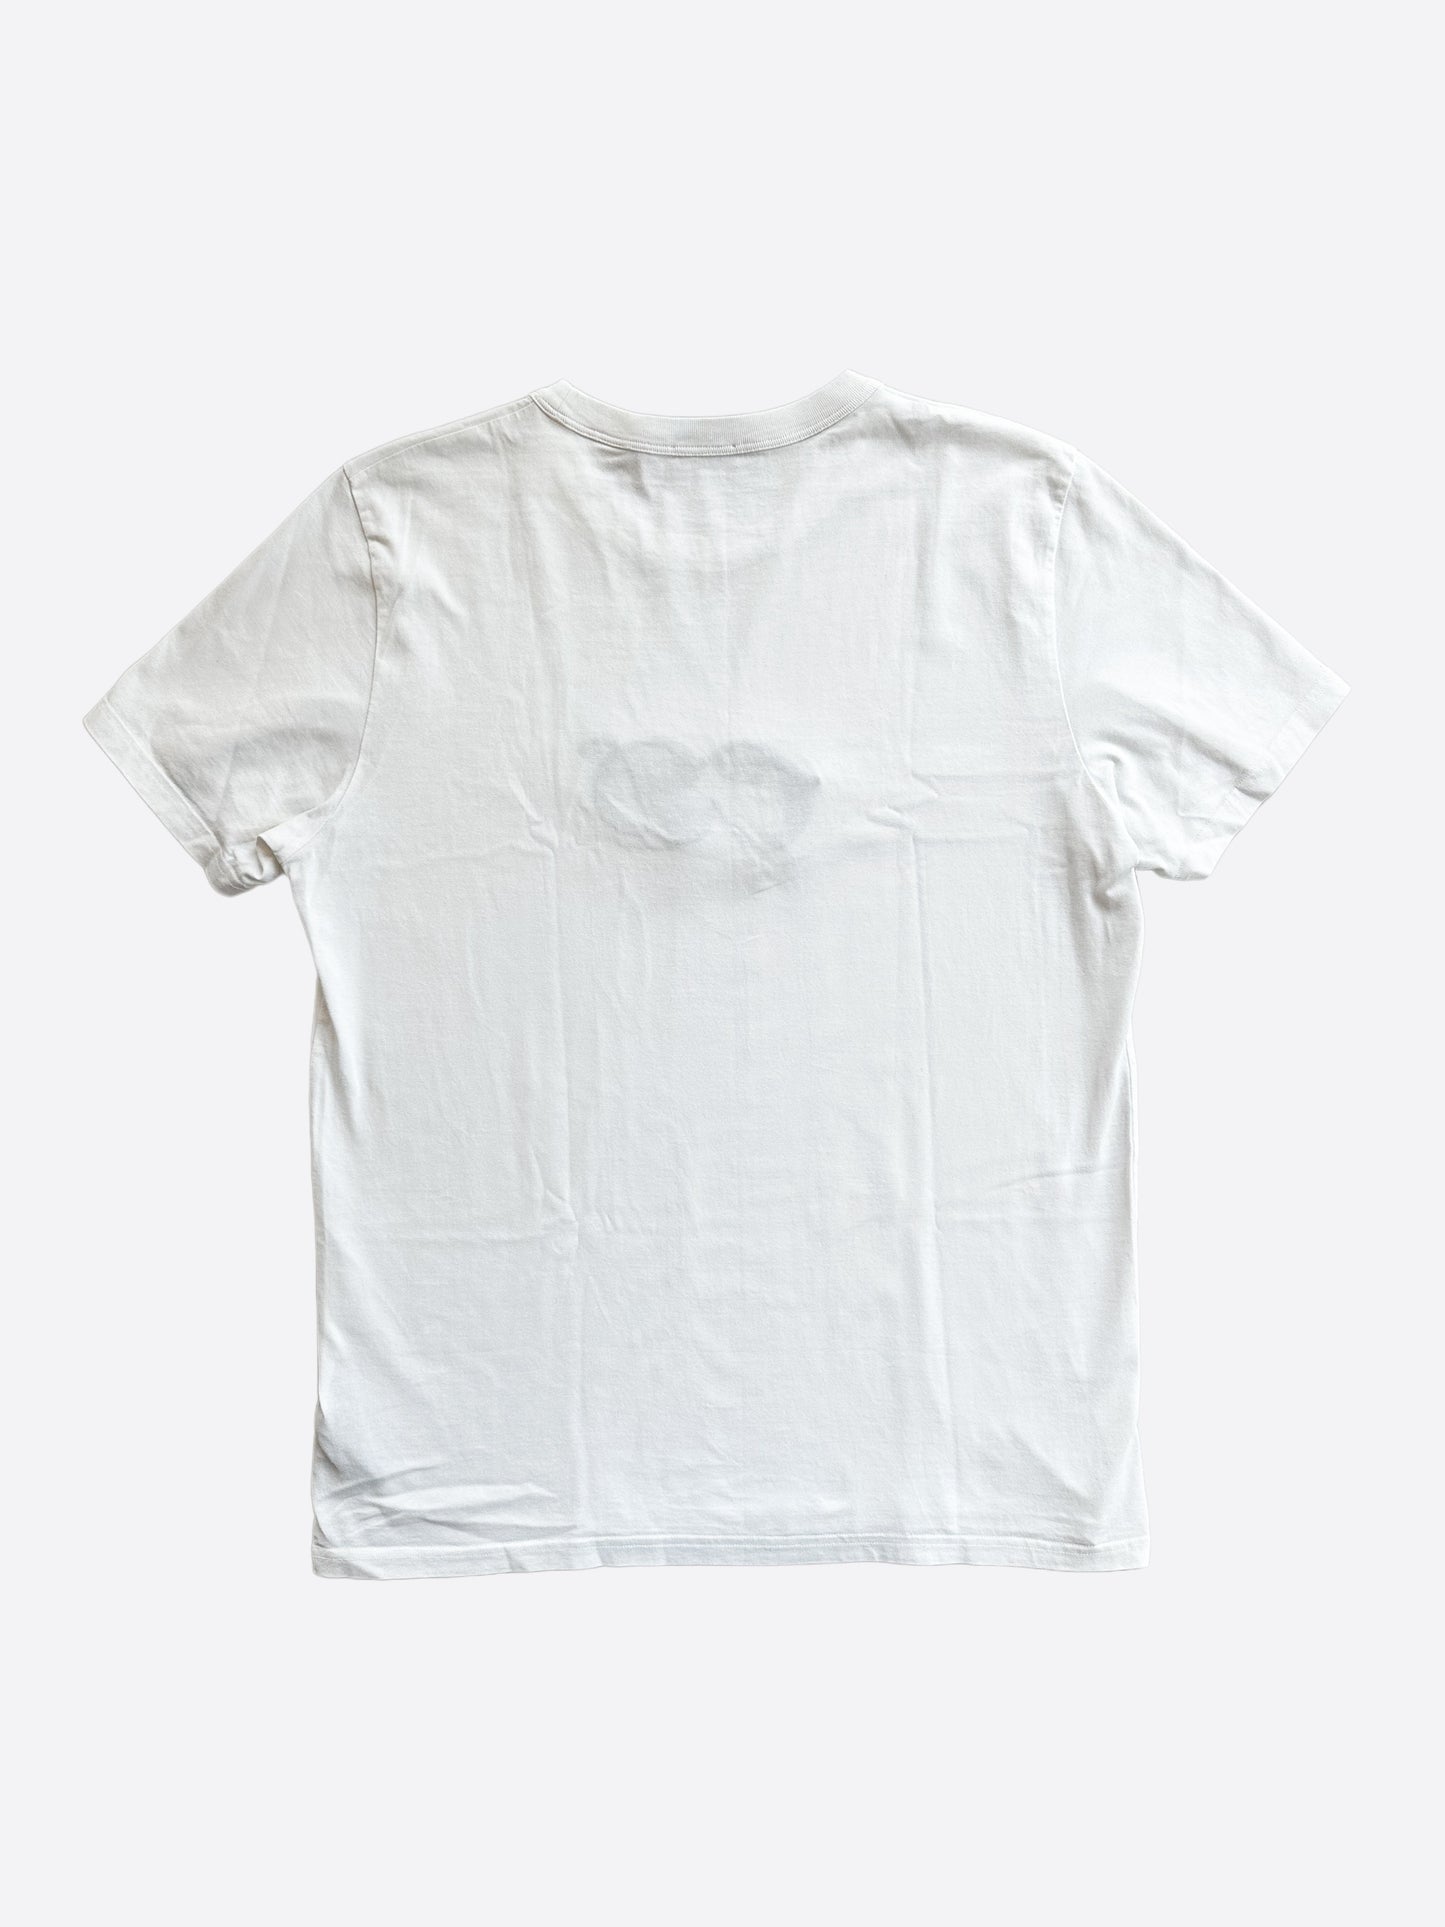 Dior Kenny Scharf White & Black Embroidered Logo T-Shirt